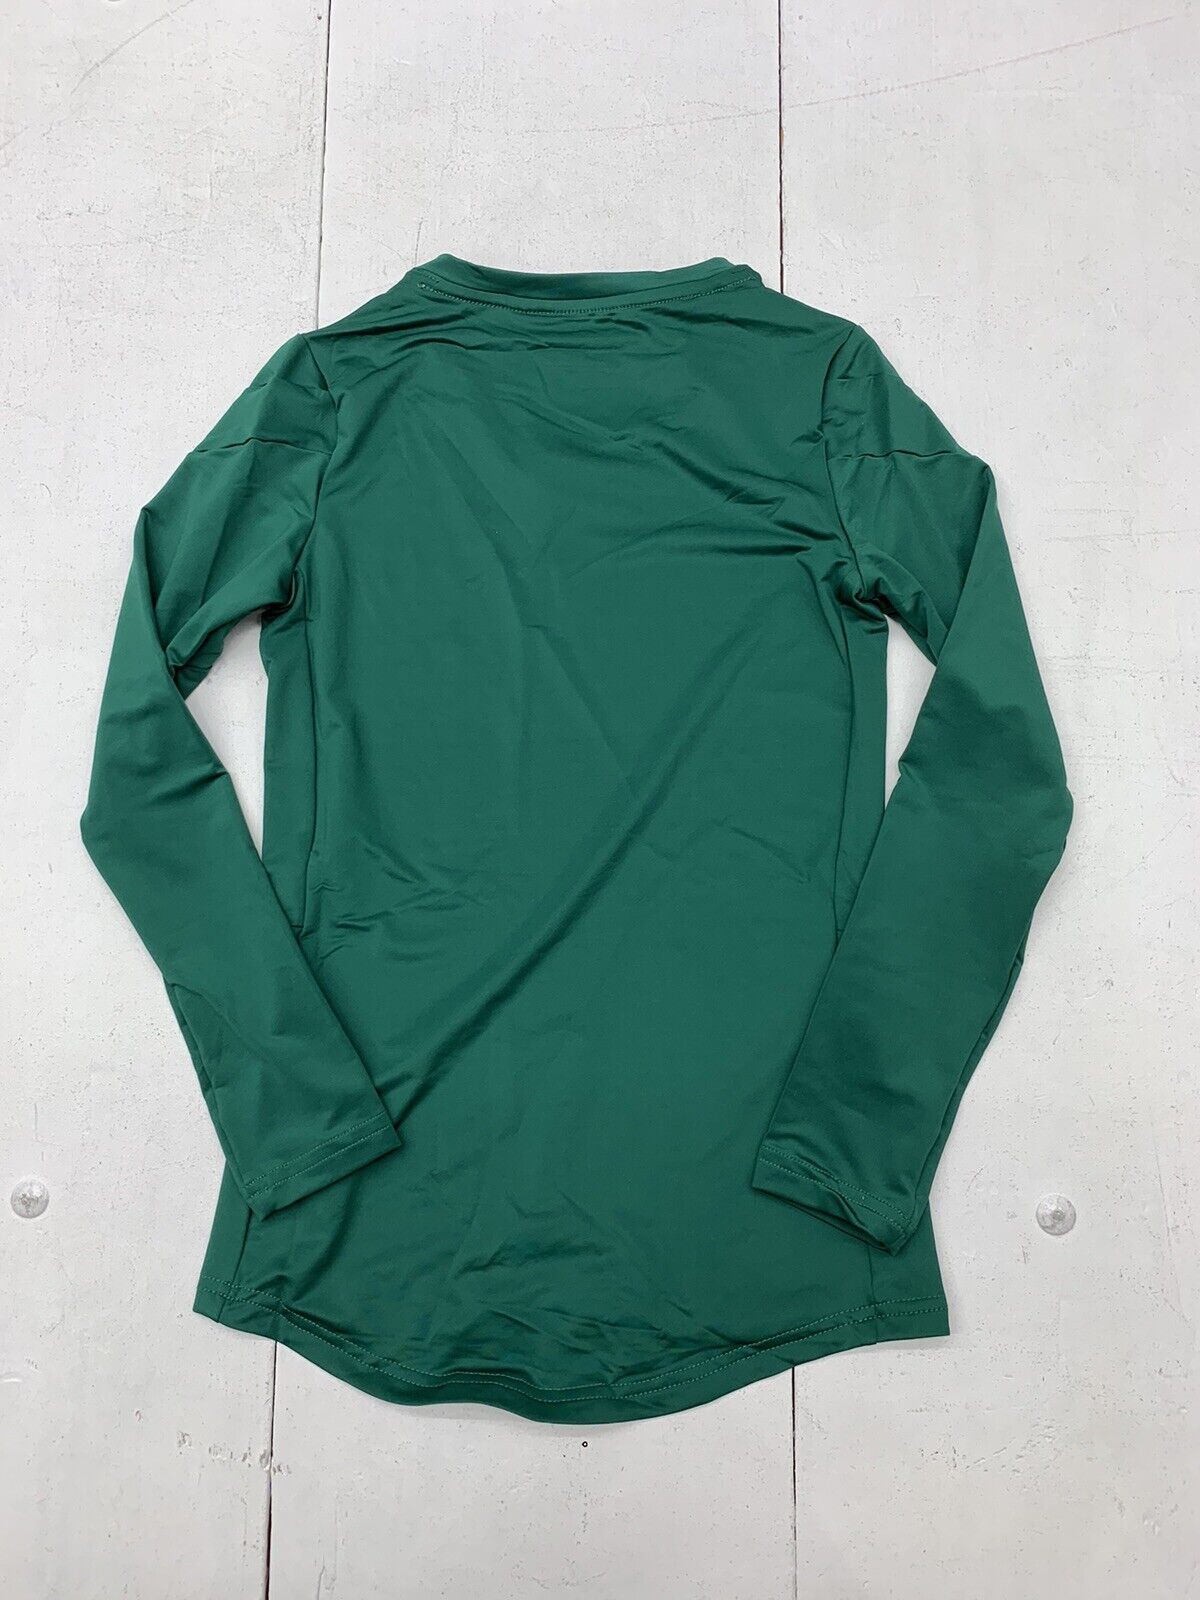 Mizuno Womens Green Long Sleeve Athletic Shirt Size XL - beyond